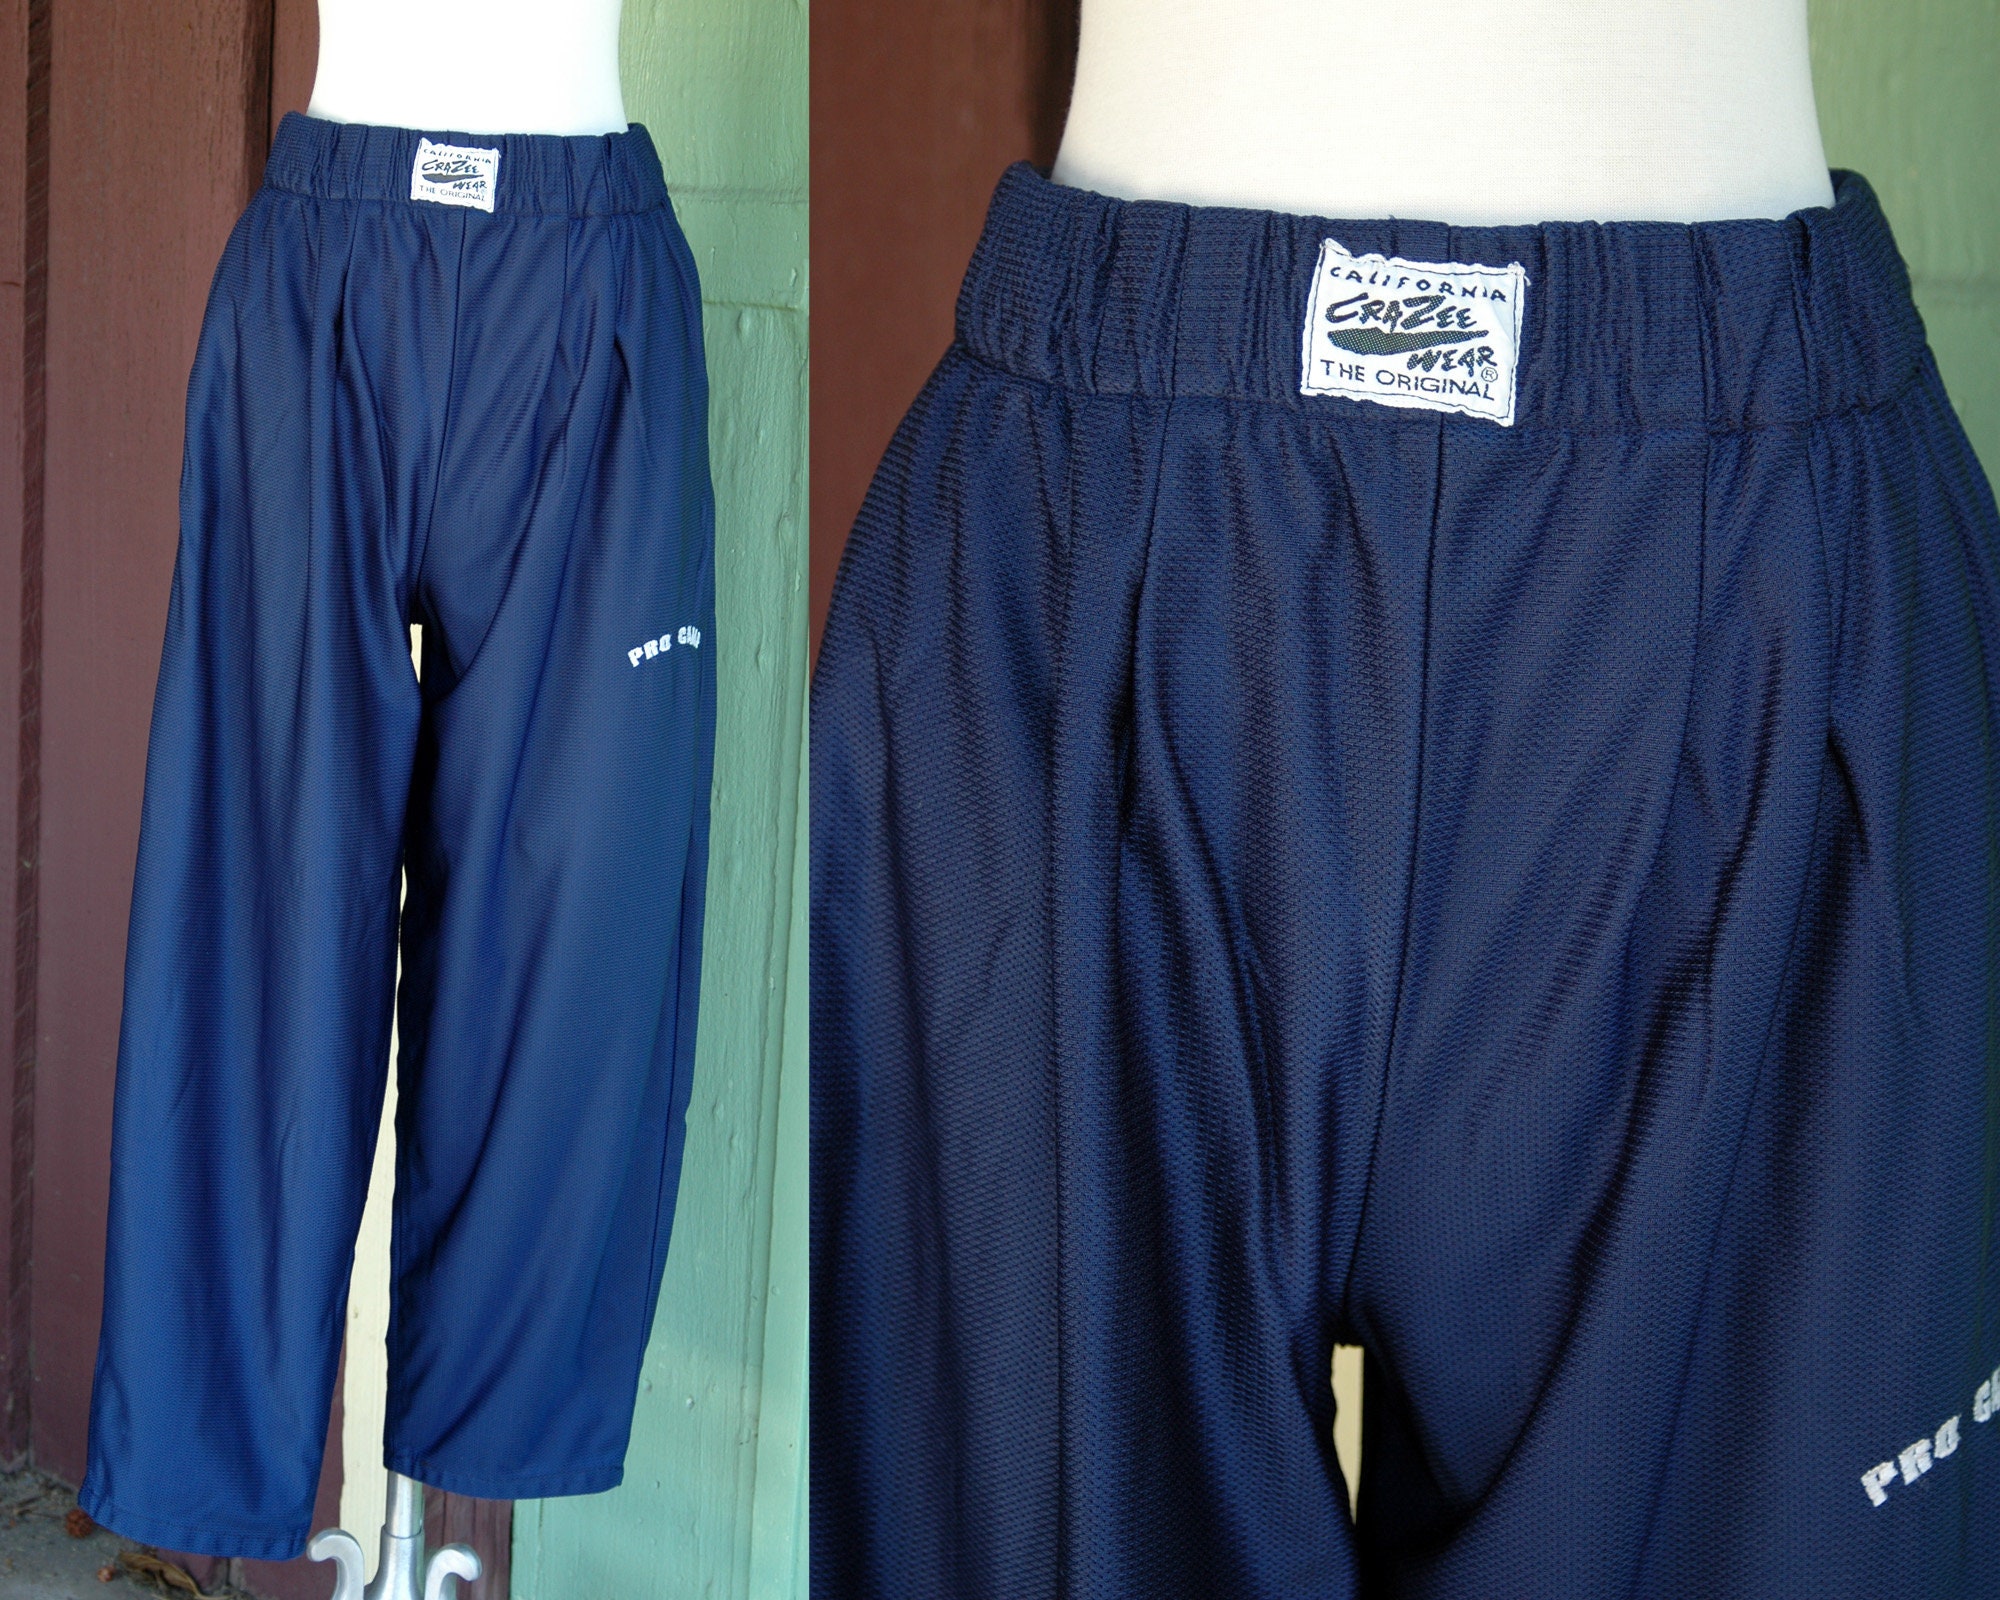 1980s Navy Blue Nylon Workout Pants by California Crazee Wear